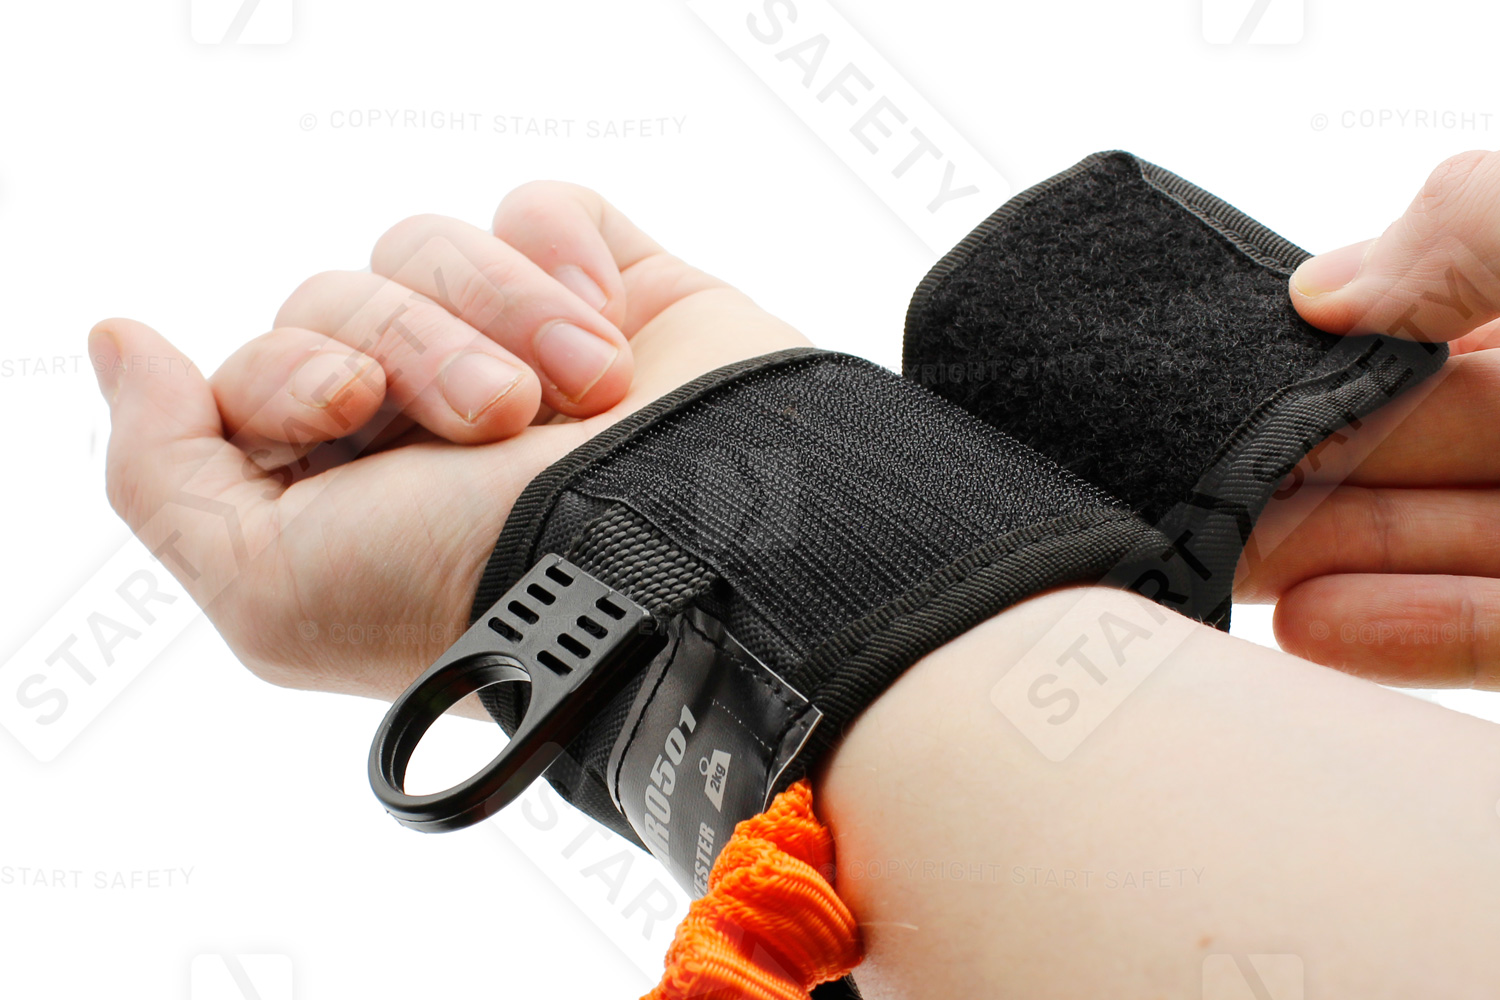 Wrist Lanyard With Velcro On Someone's Wrist